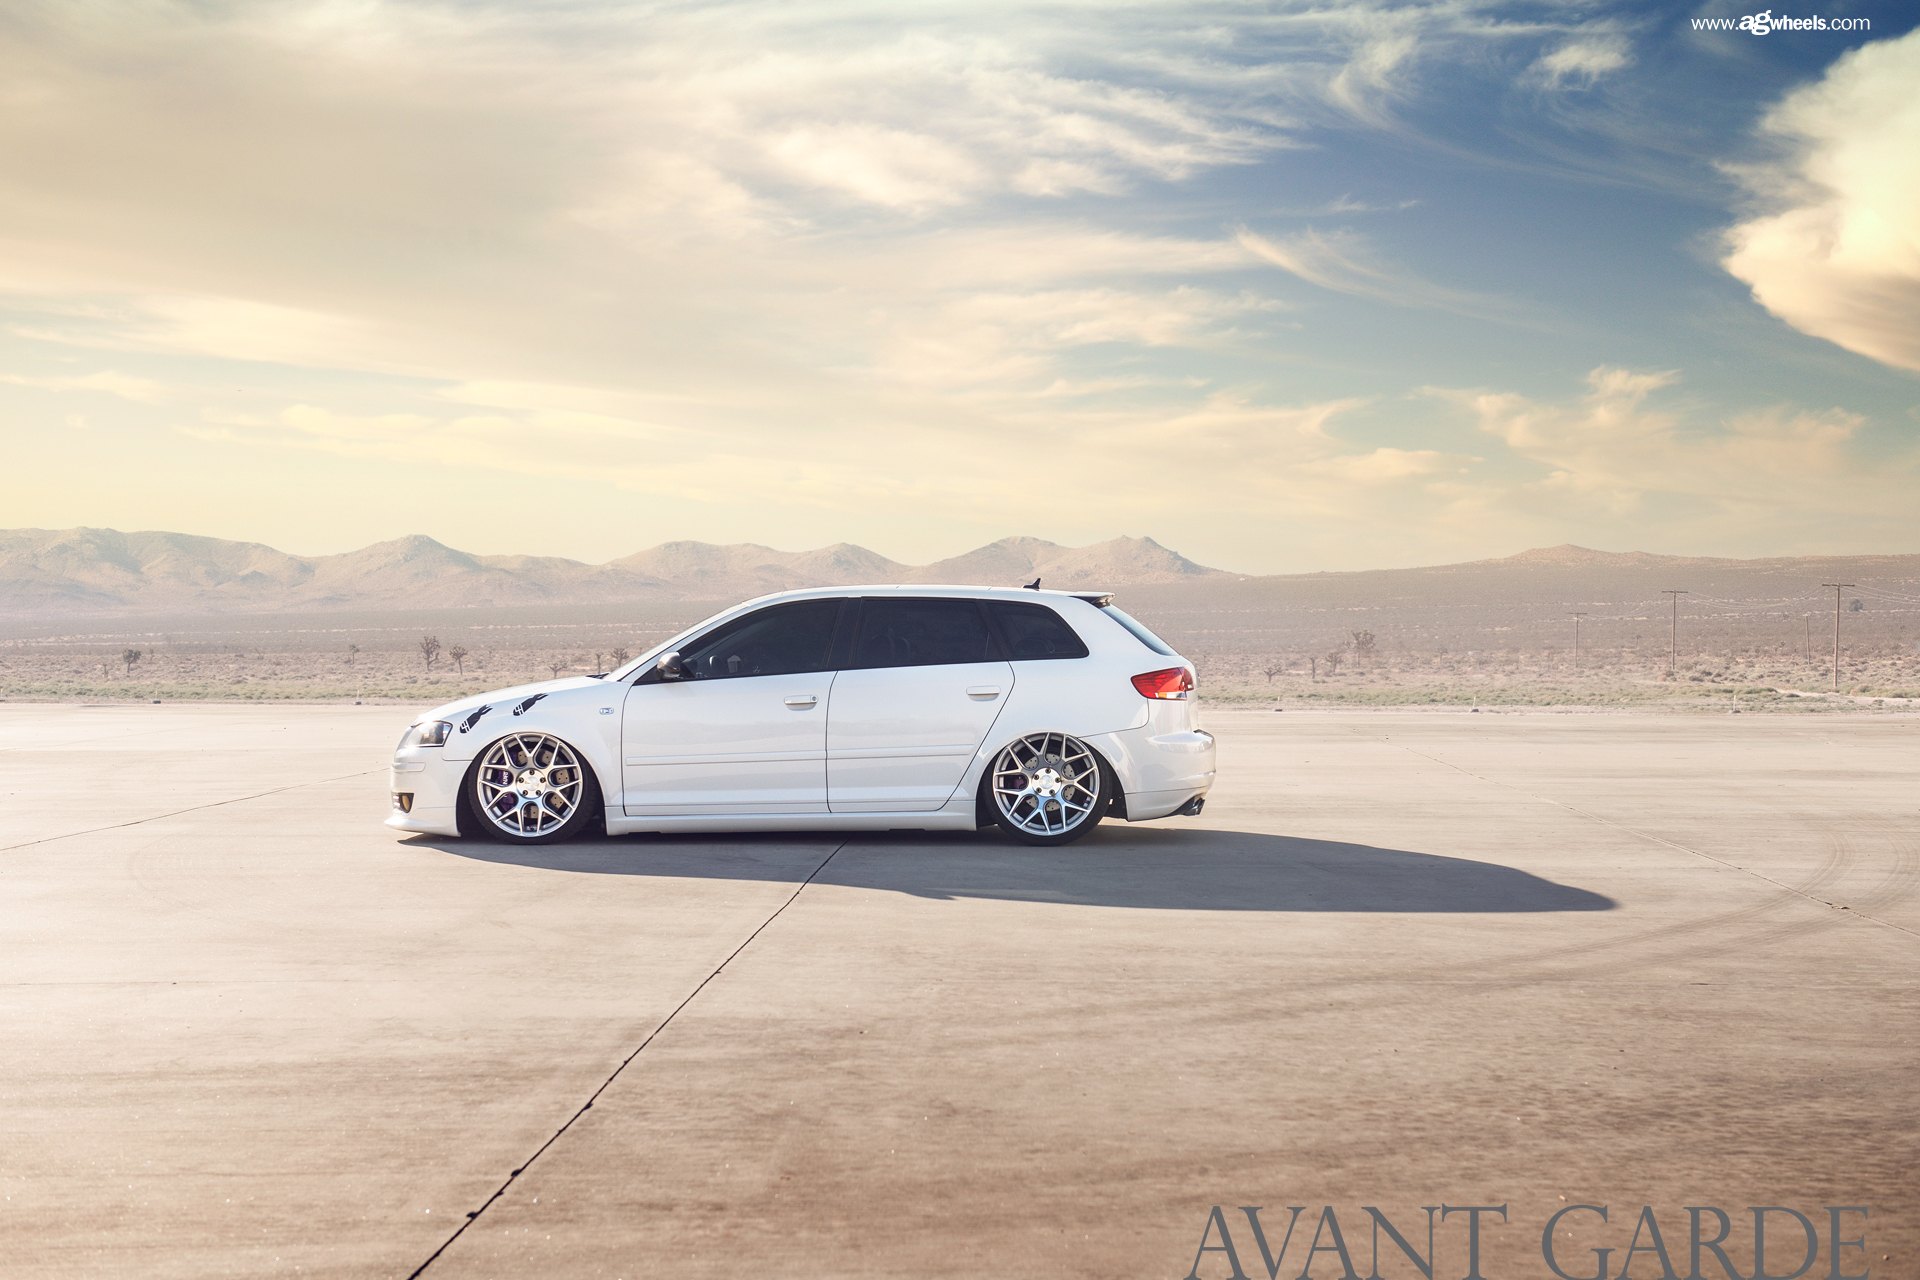 Custom Side Skirts on White Lowered Audi A3 - Photo by Avant Garde Wheels